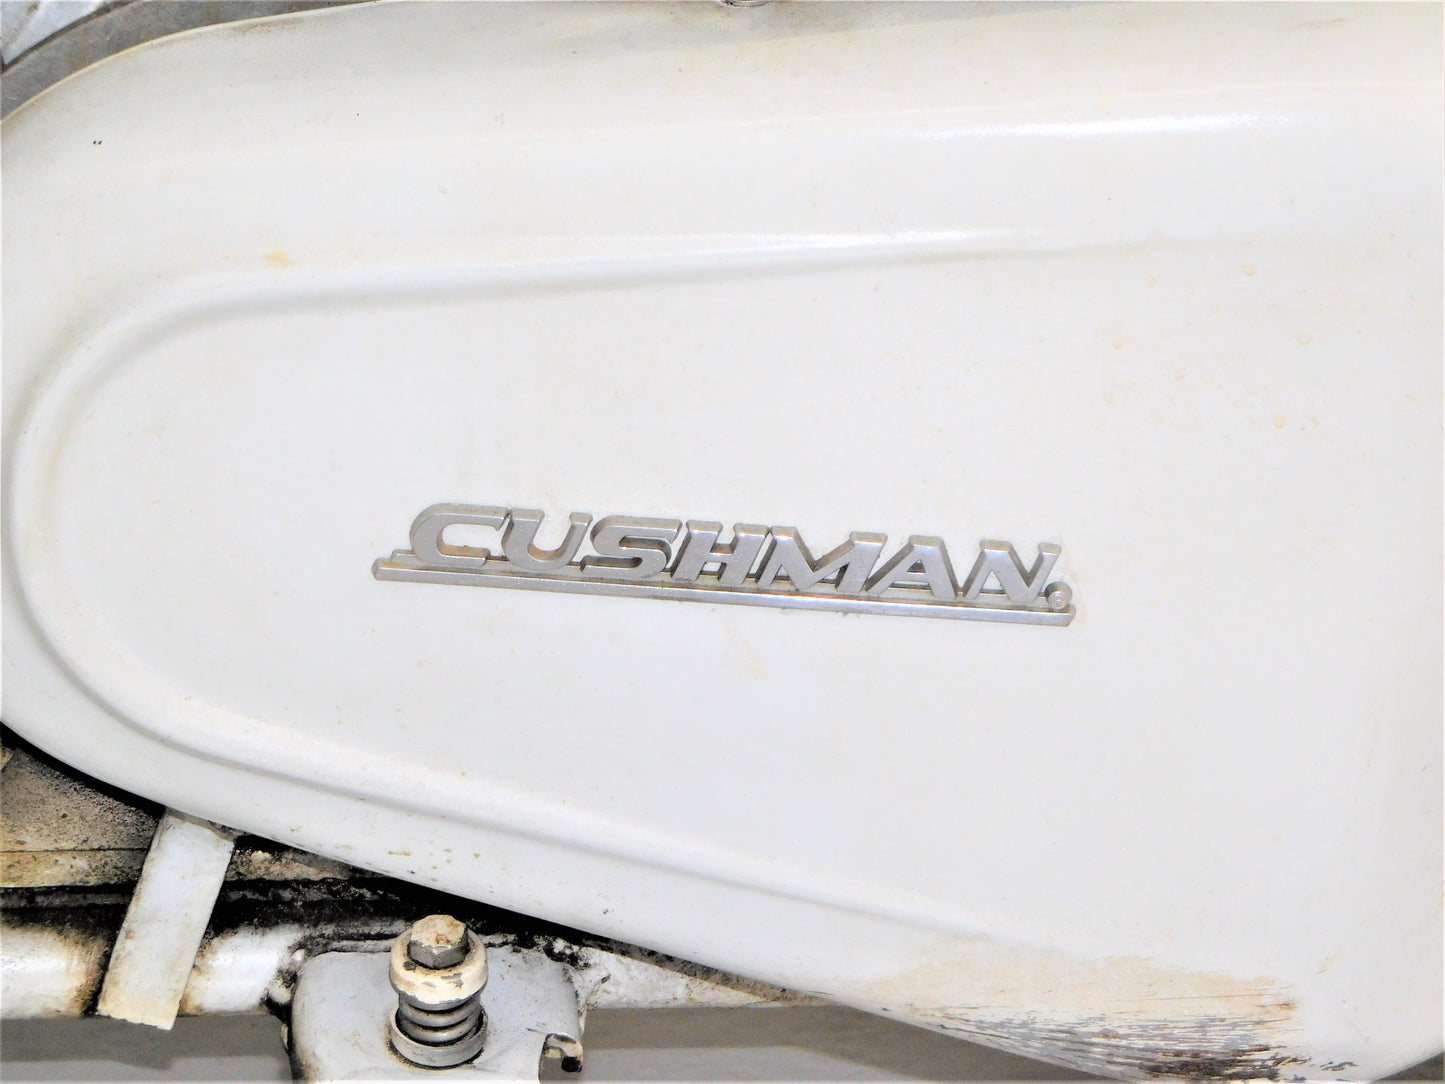 1963 Cushman Shriner's Super Silver Eagle